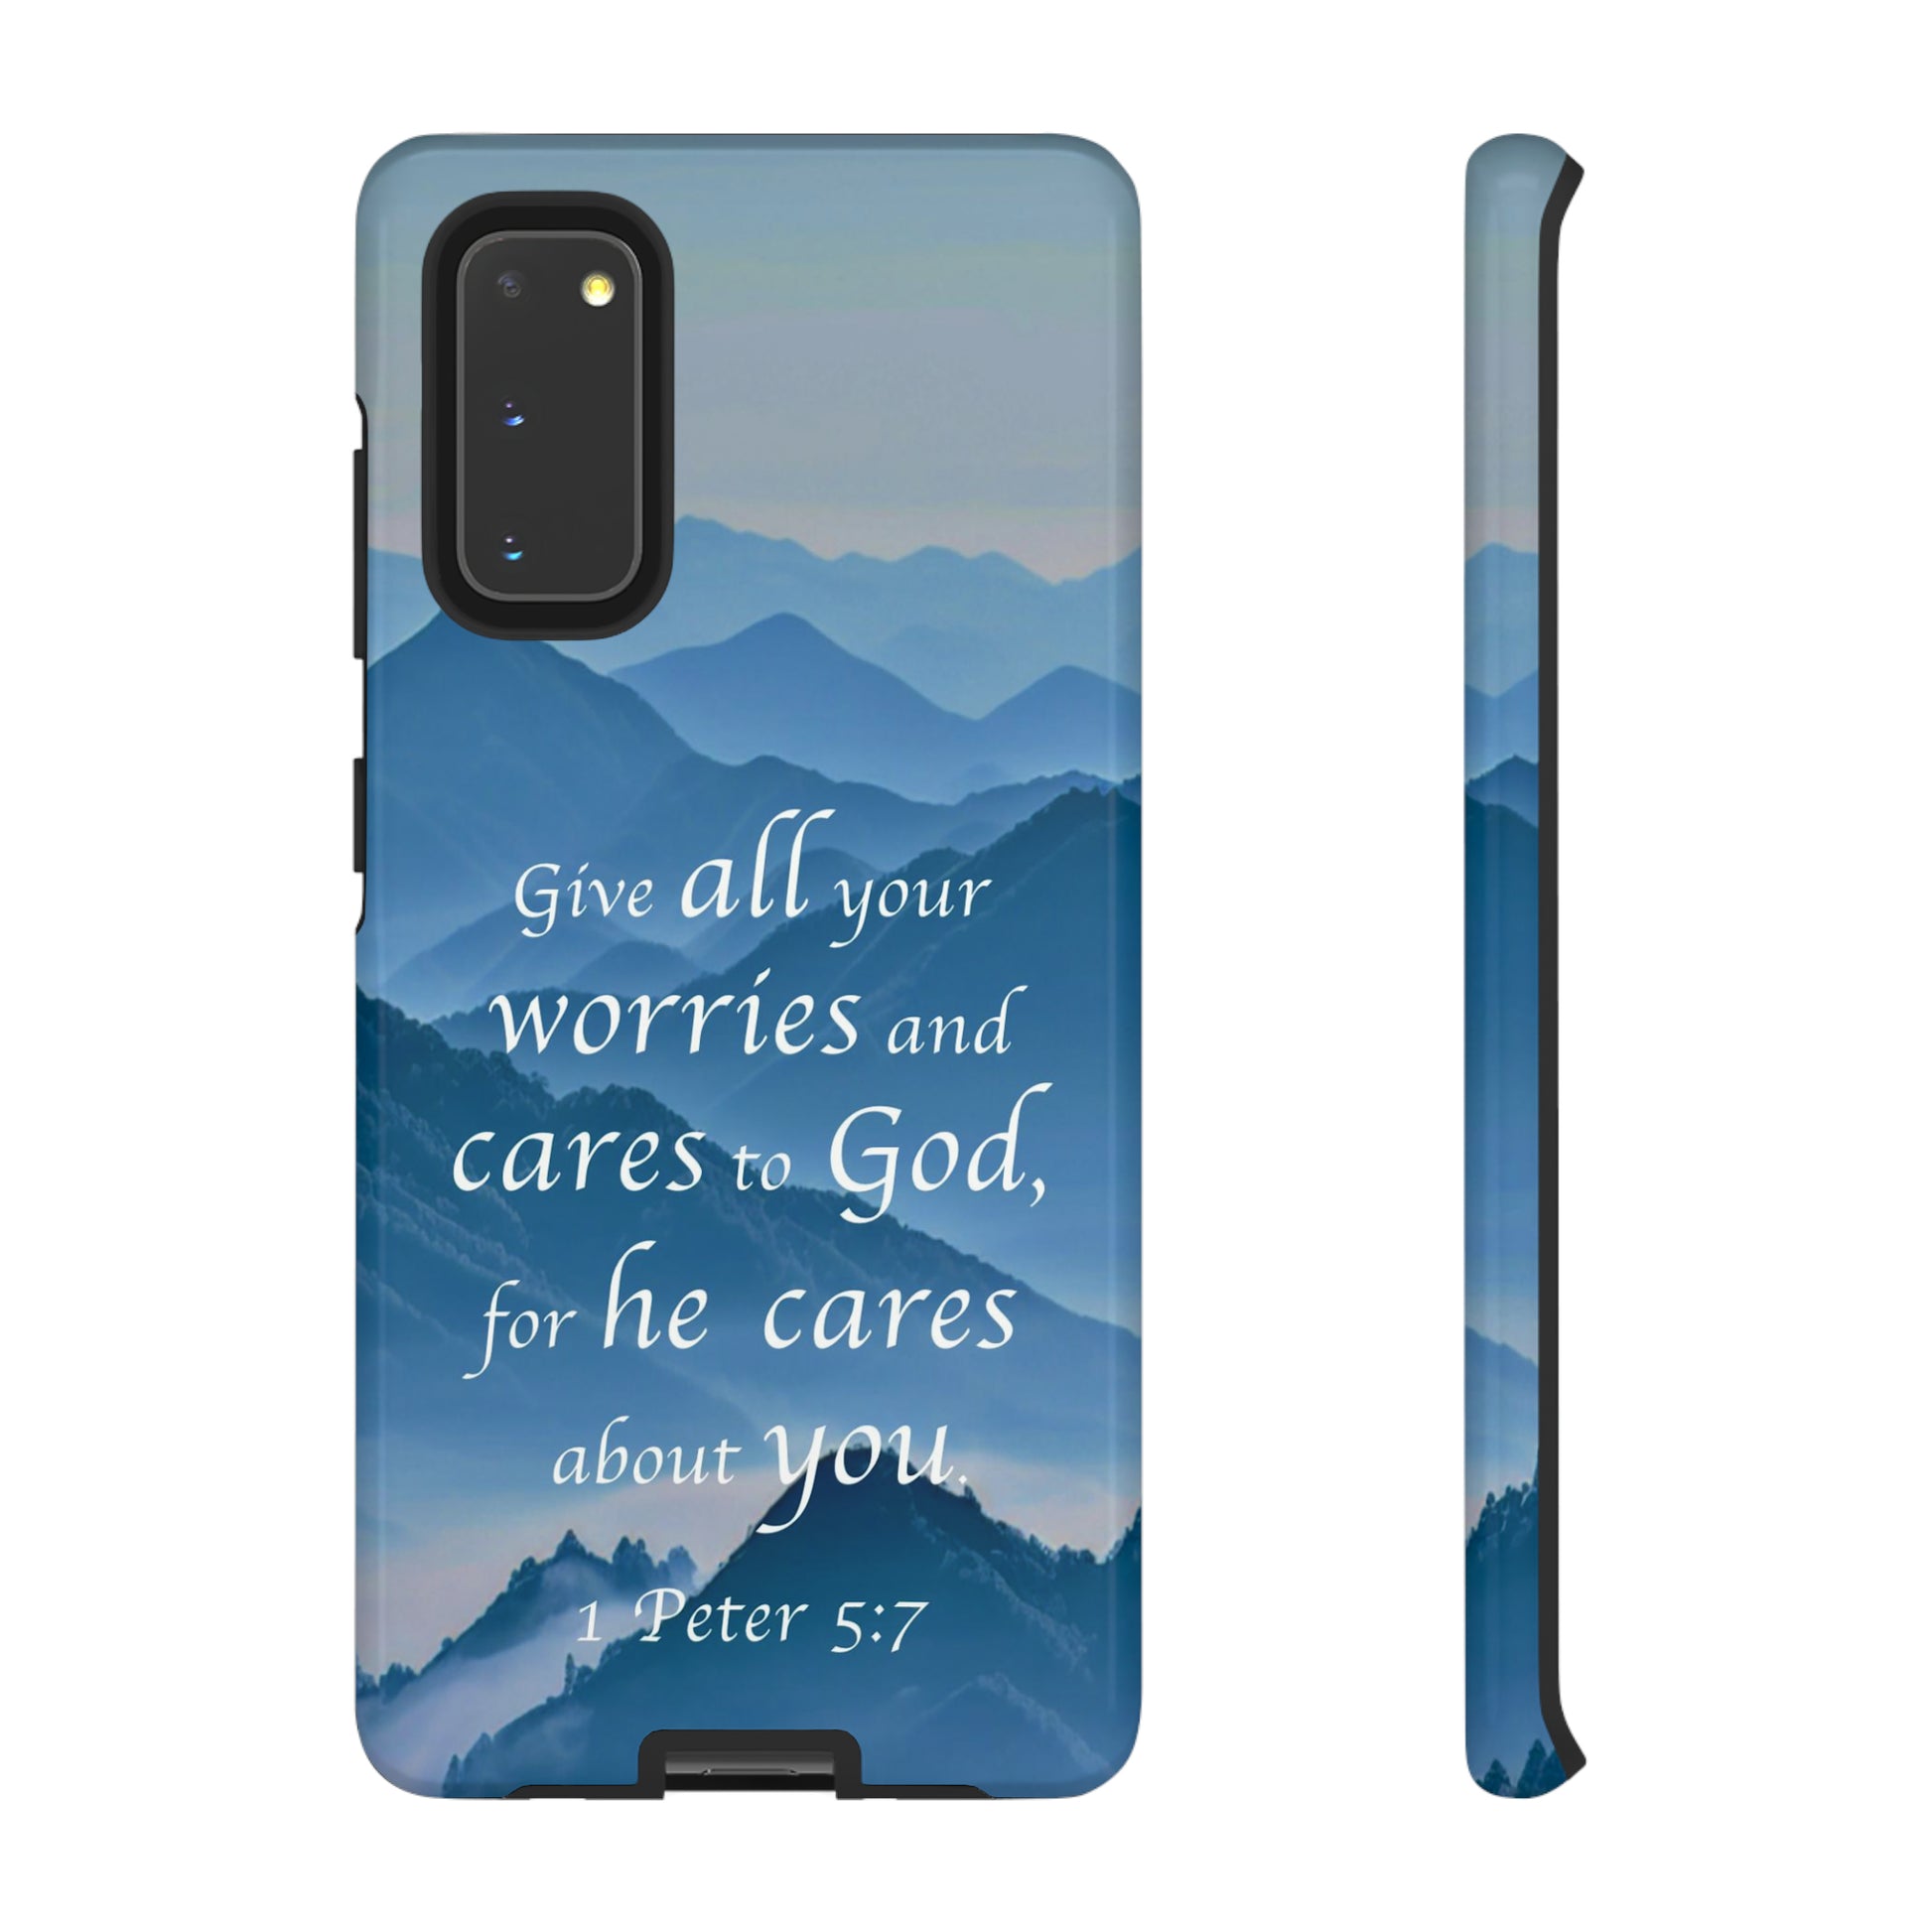 Christian phone case Samsung Galaxy S10 S10E S10 Plus